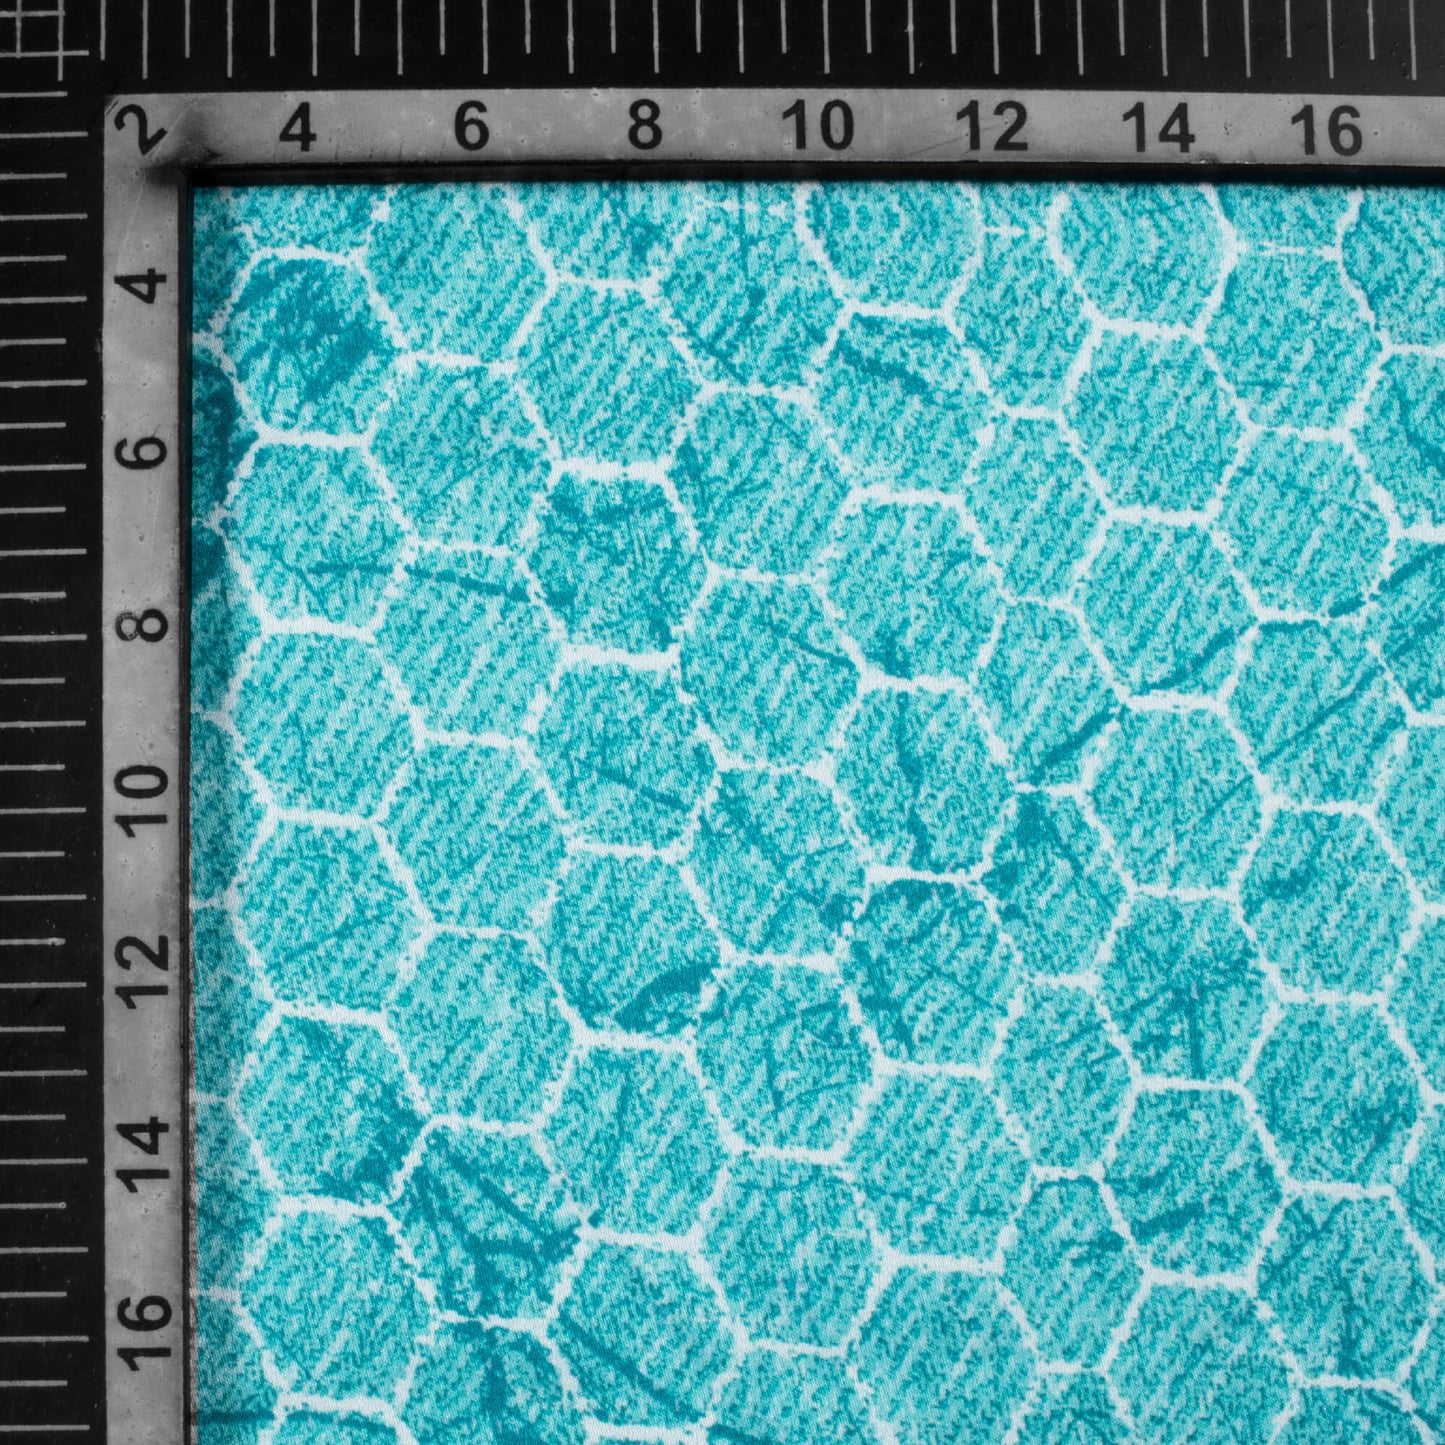 Electric Blue And White Geometric Pattern Digital Print Crepe Silk Fabric